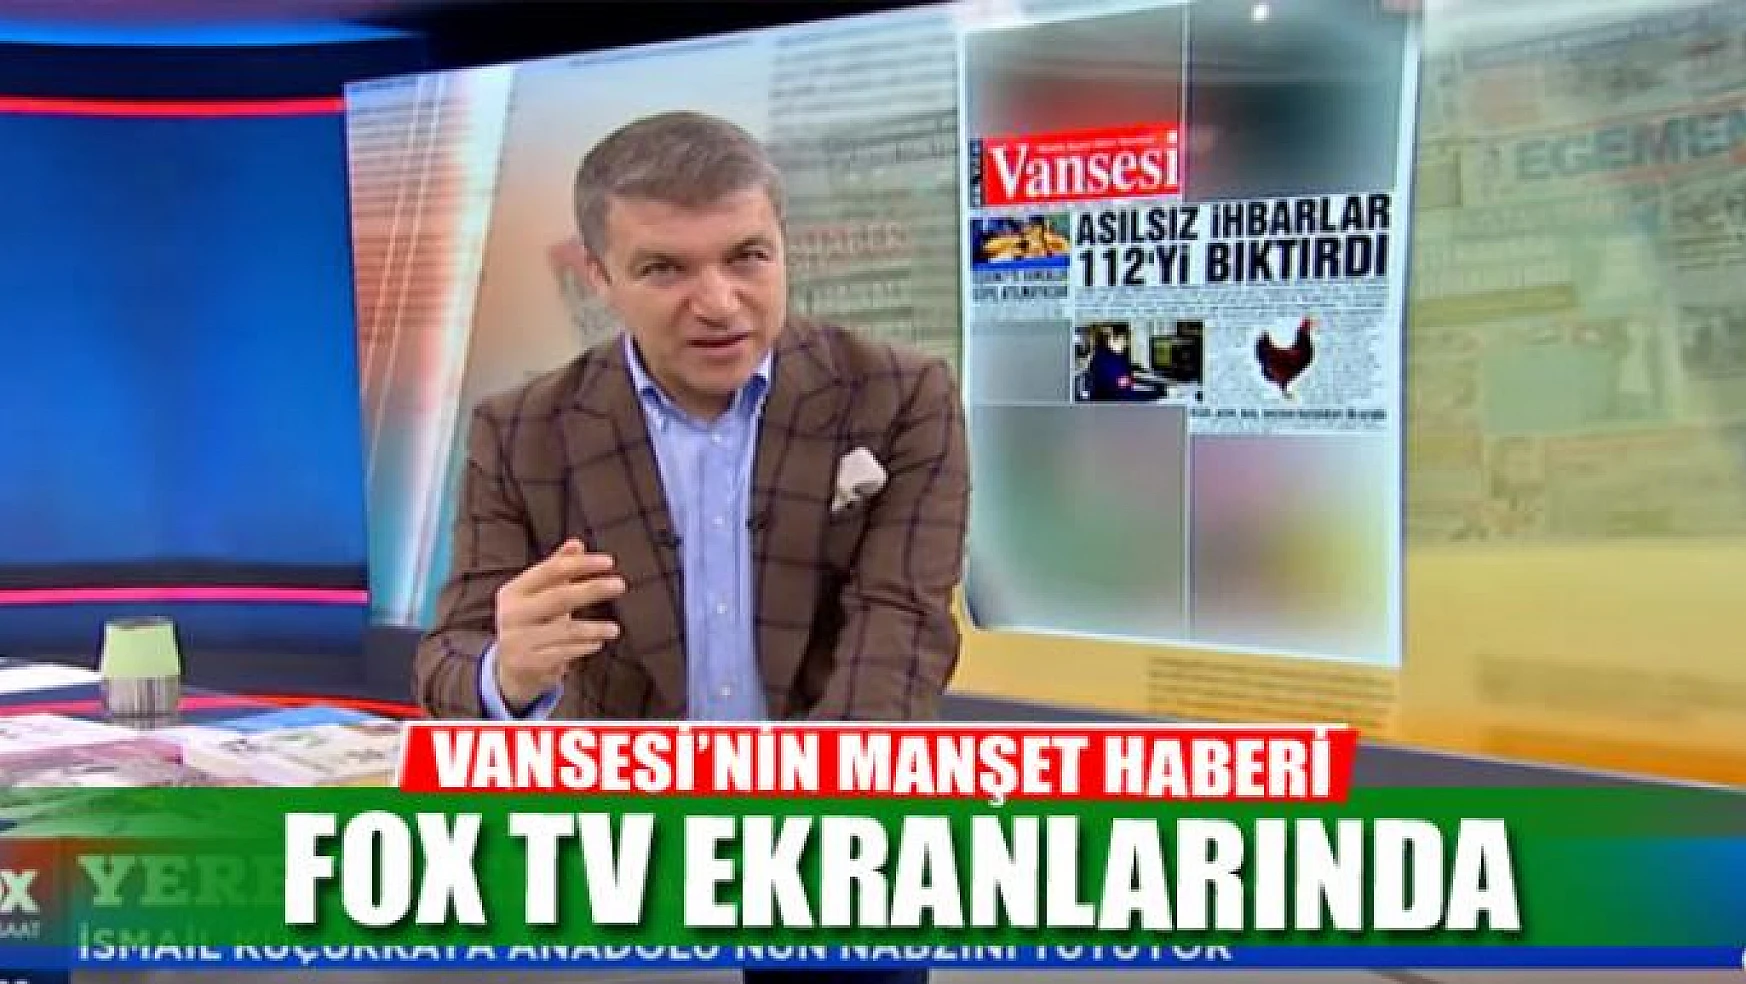 VANSESİ'NİN MANŞET HABERİ FOX TV EKRANLARINDA